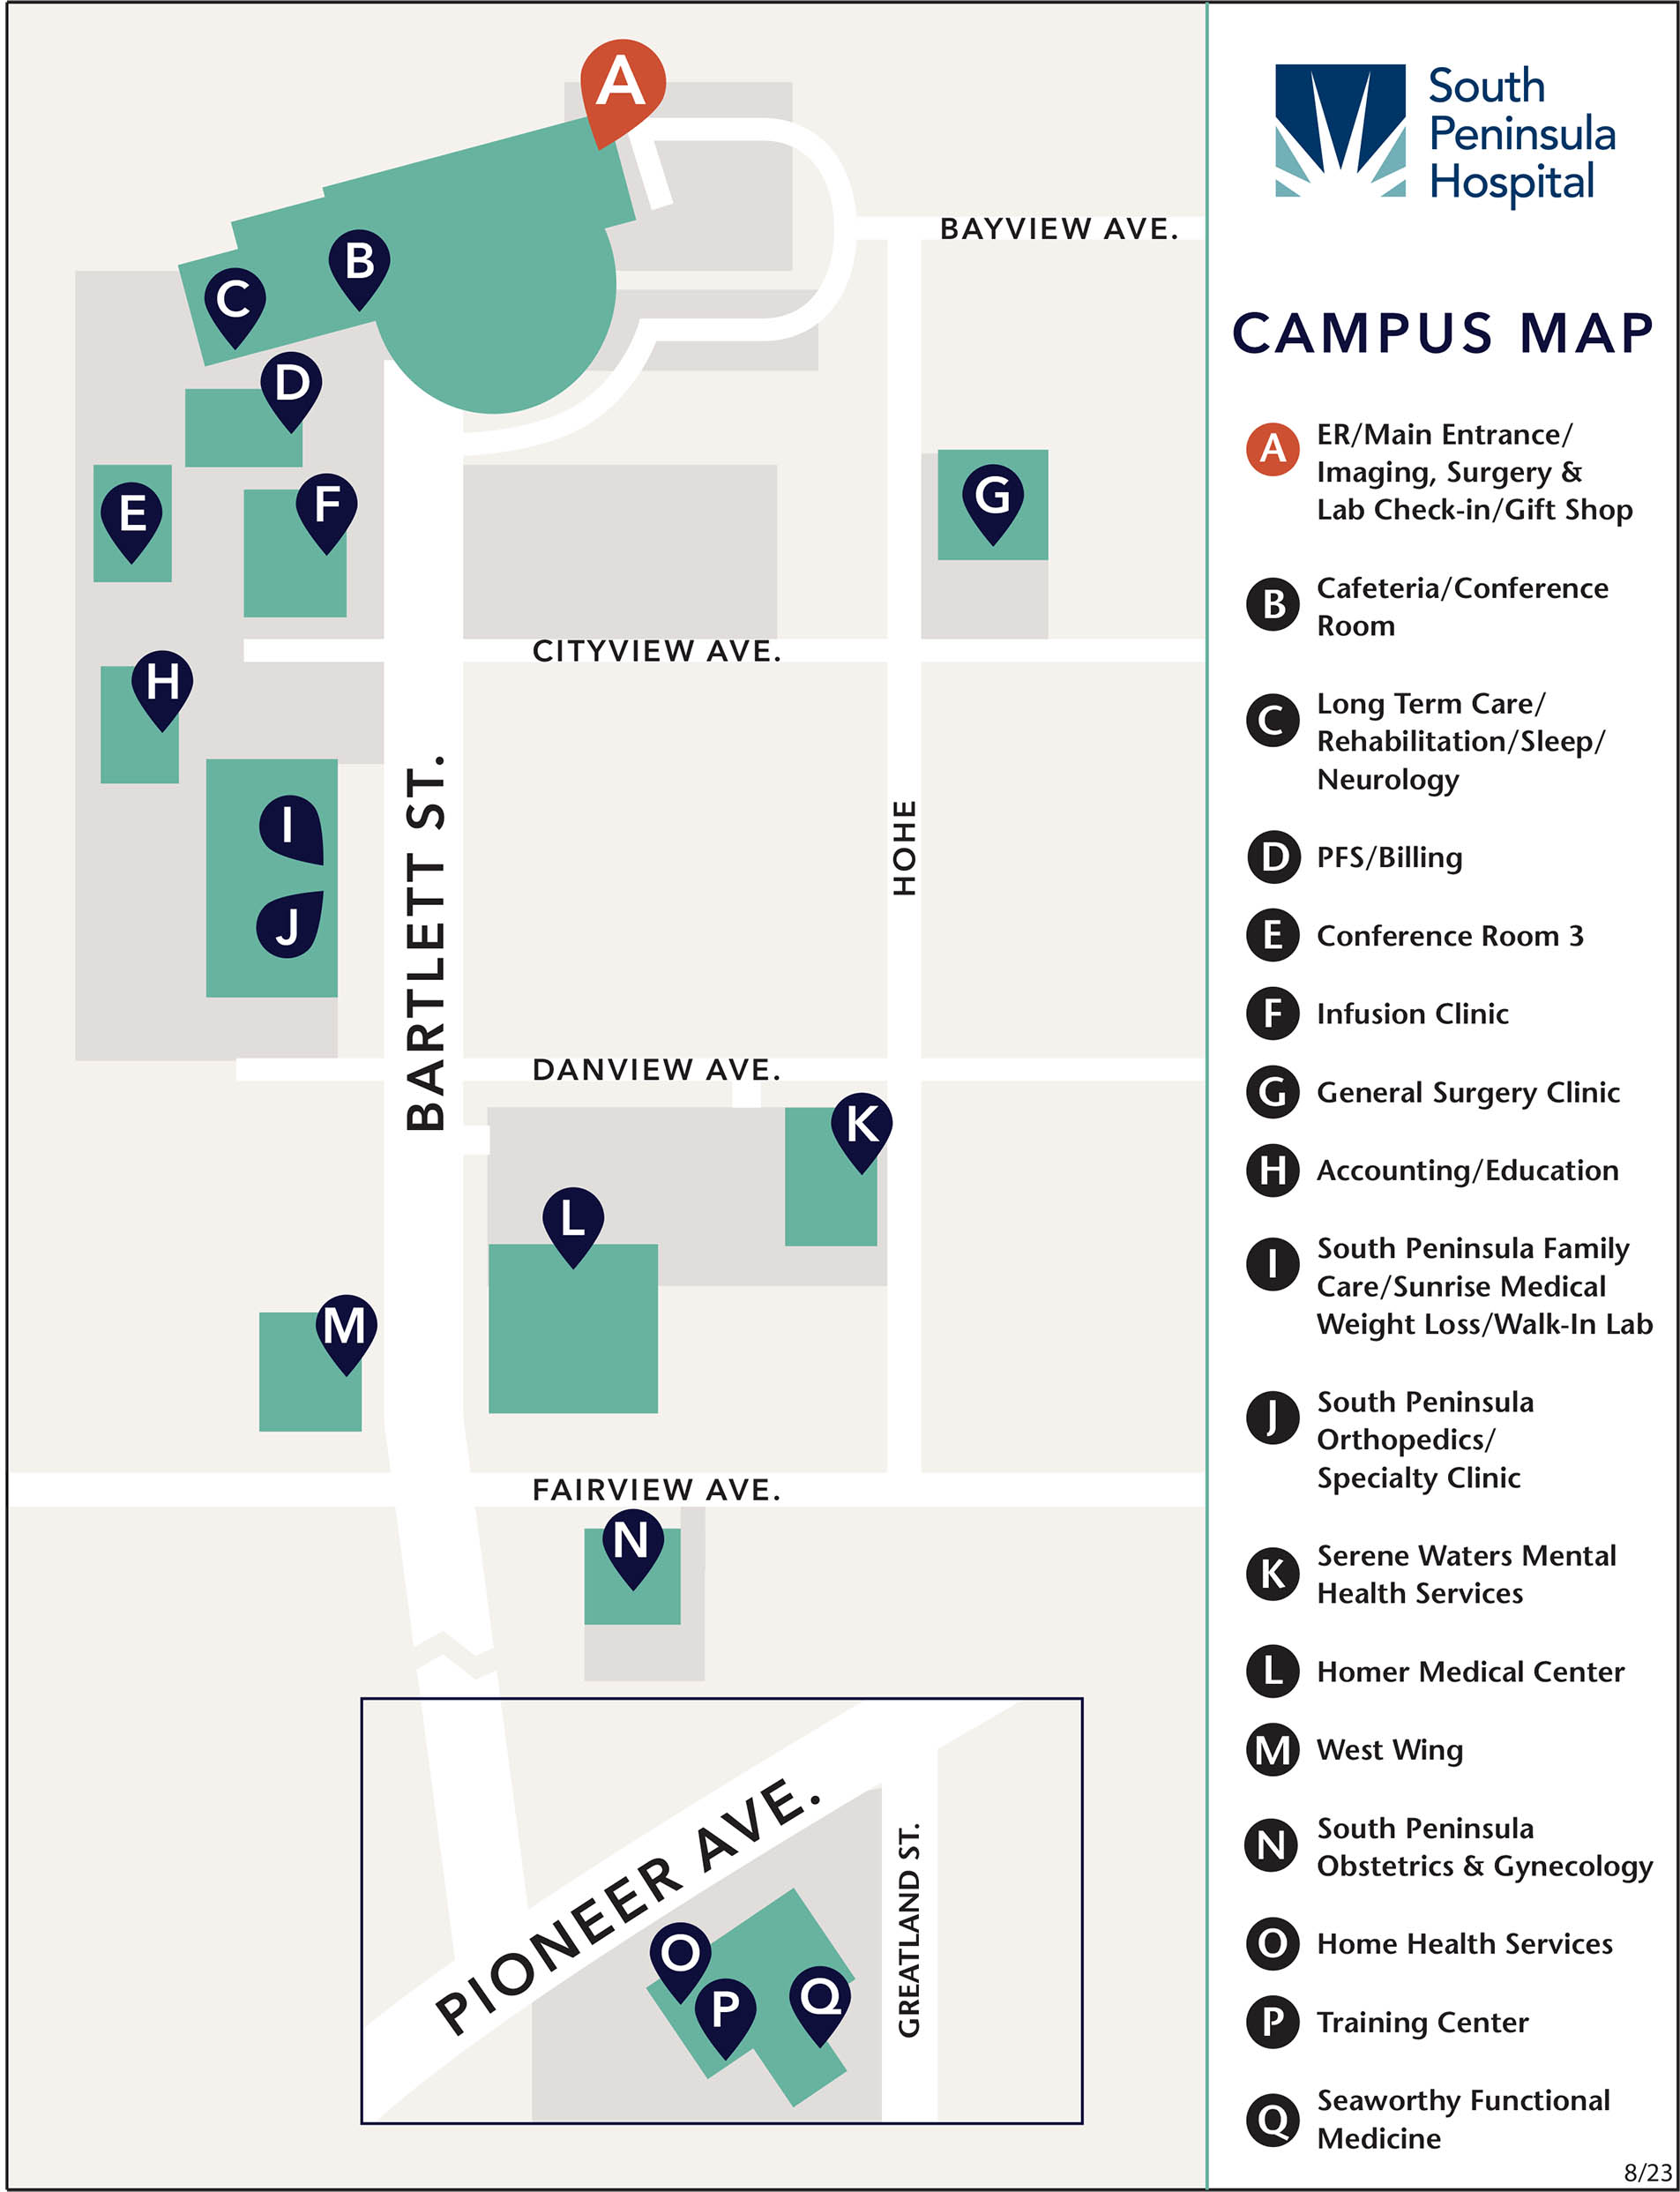 Campus Map - South Peninsula Hospital